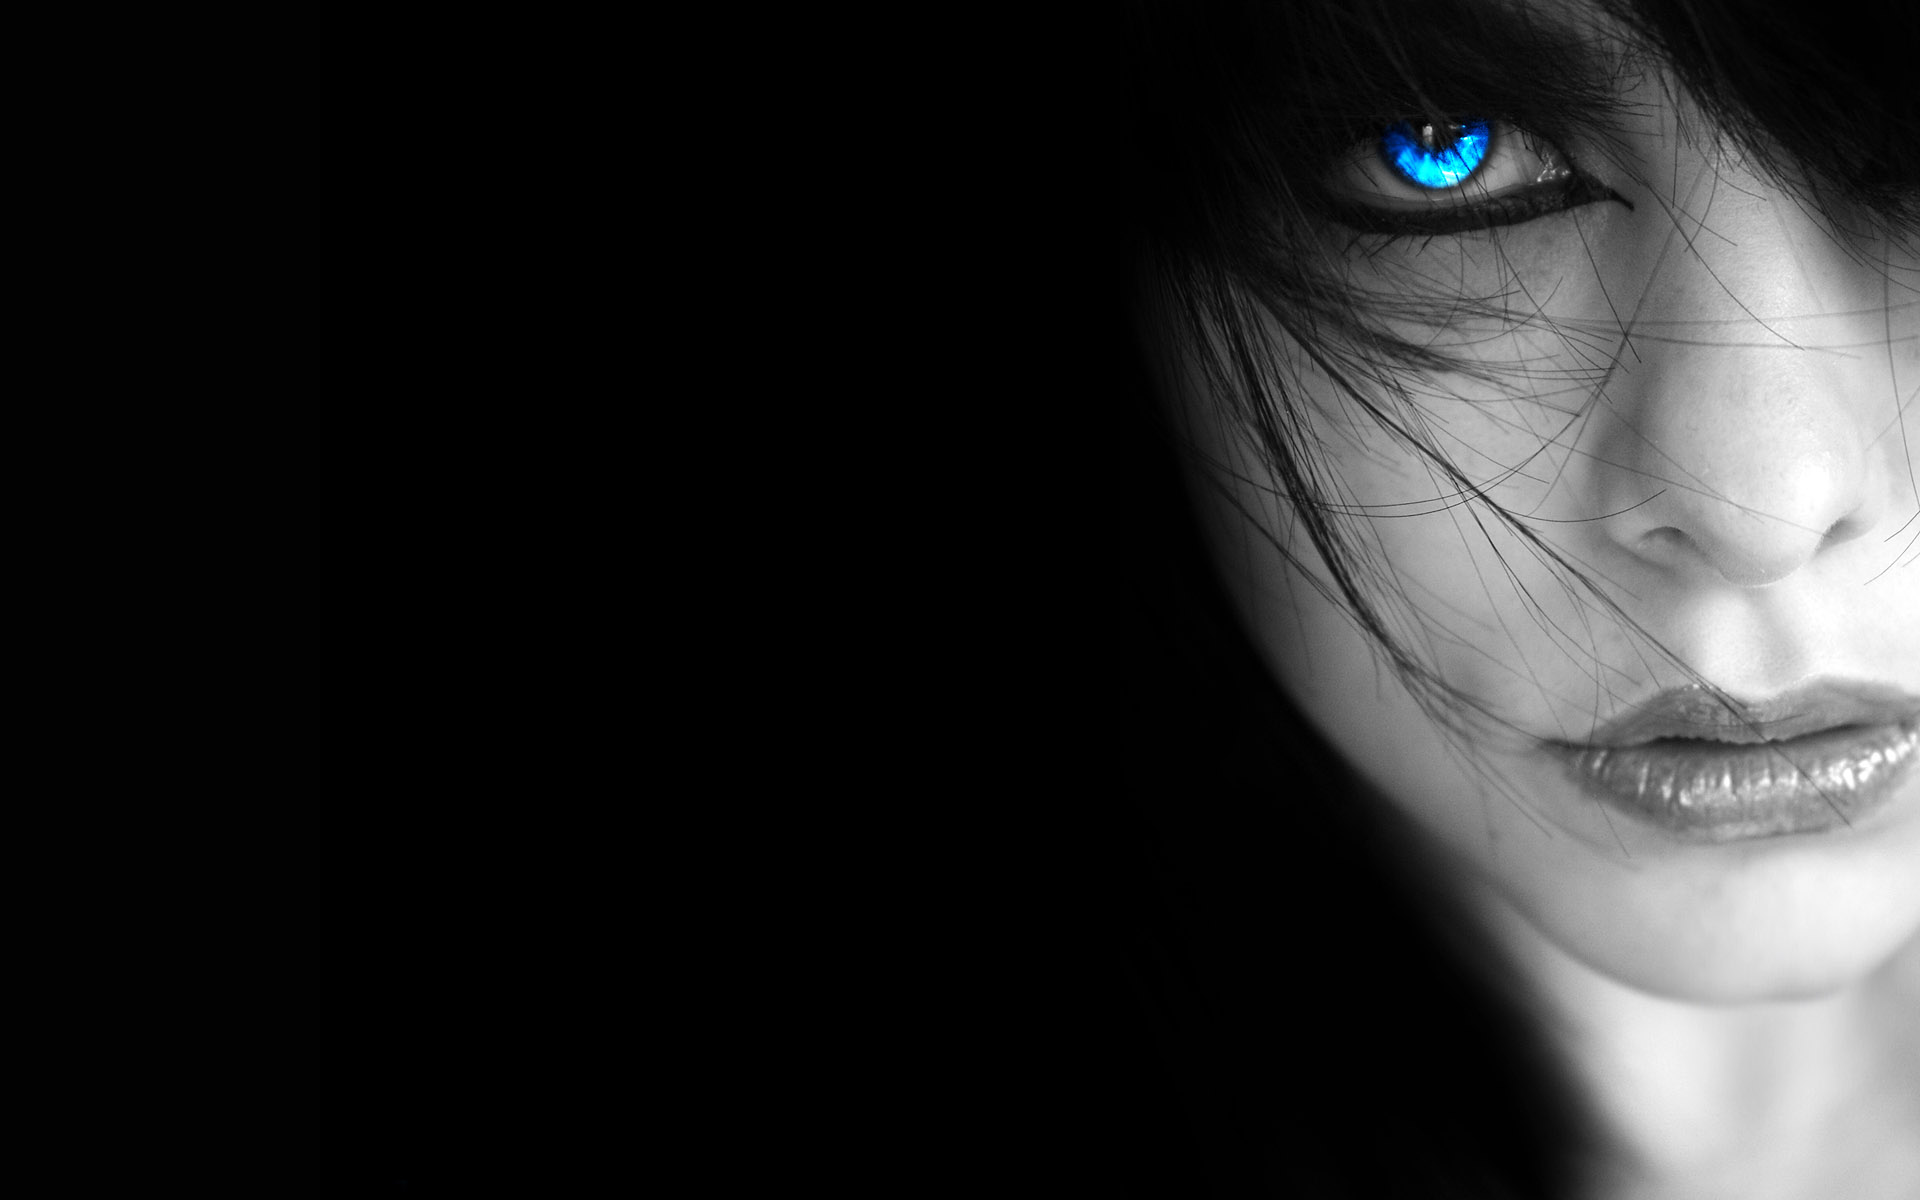 1079715 descargar imagen mujeres, oscuro, gótico, misterioso, ojos azules: fondos de pantalla y protectores de pantalla gratis